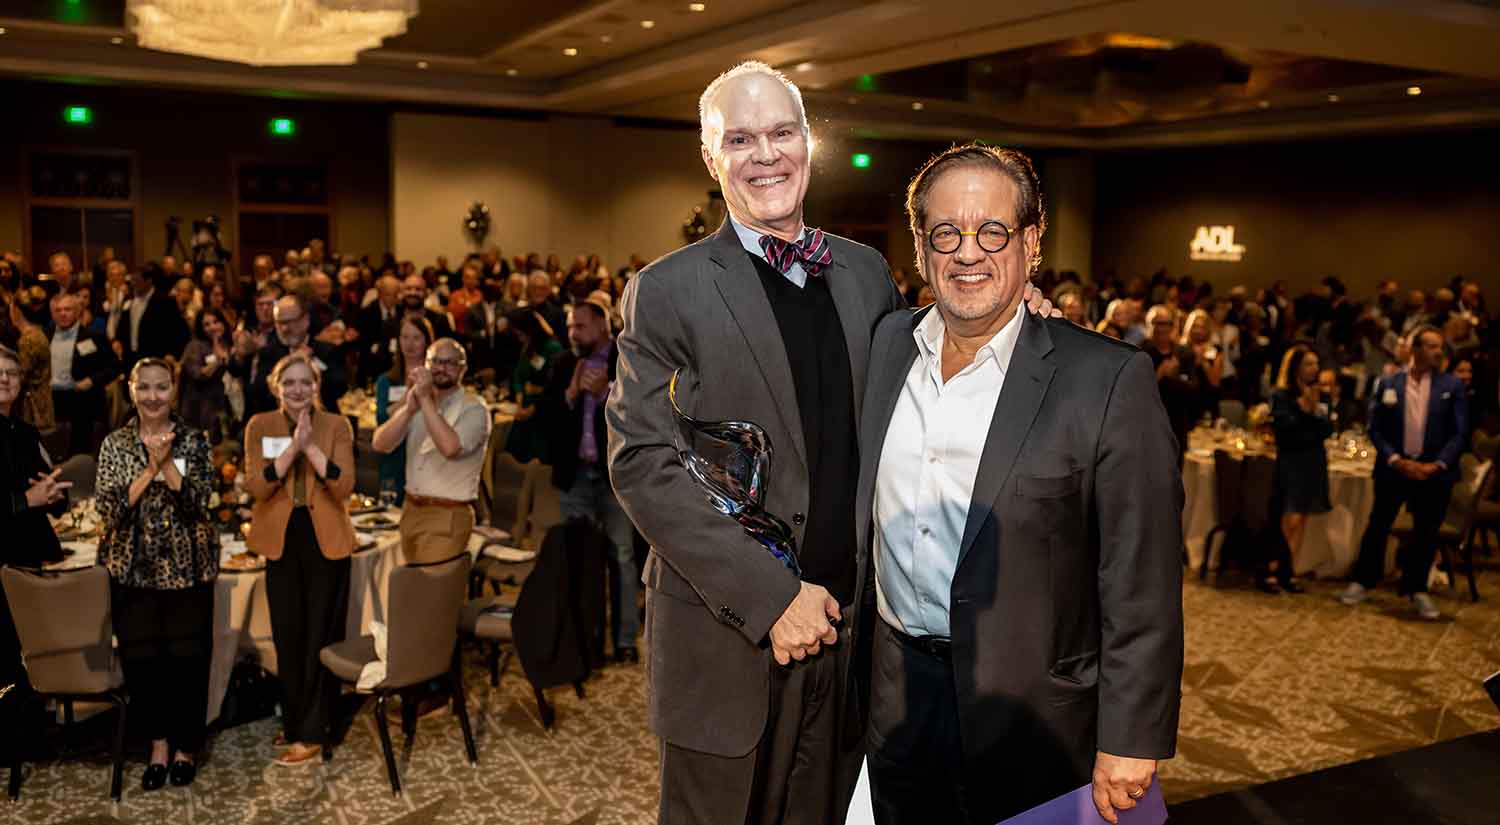 ADL Austin Honors Eugene Sepulveda and Steven Tomlinson at Golden Door Awards Dinner